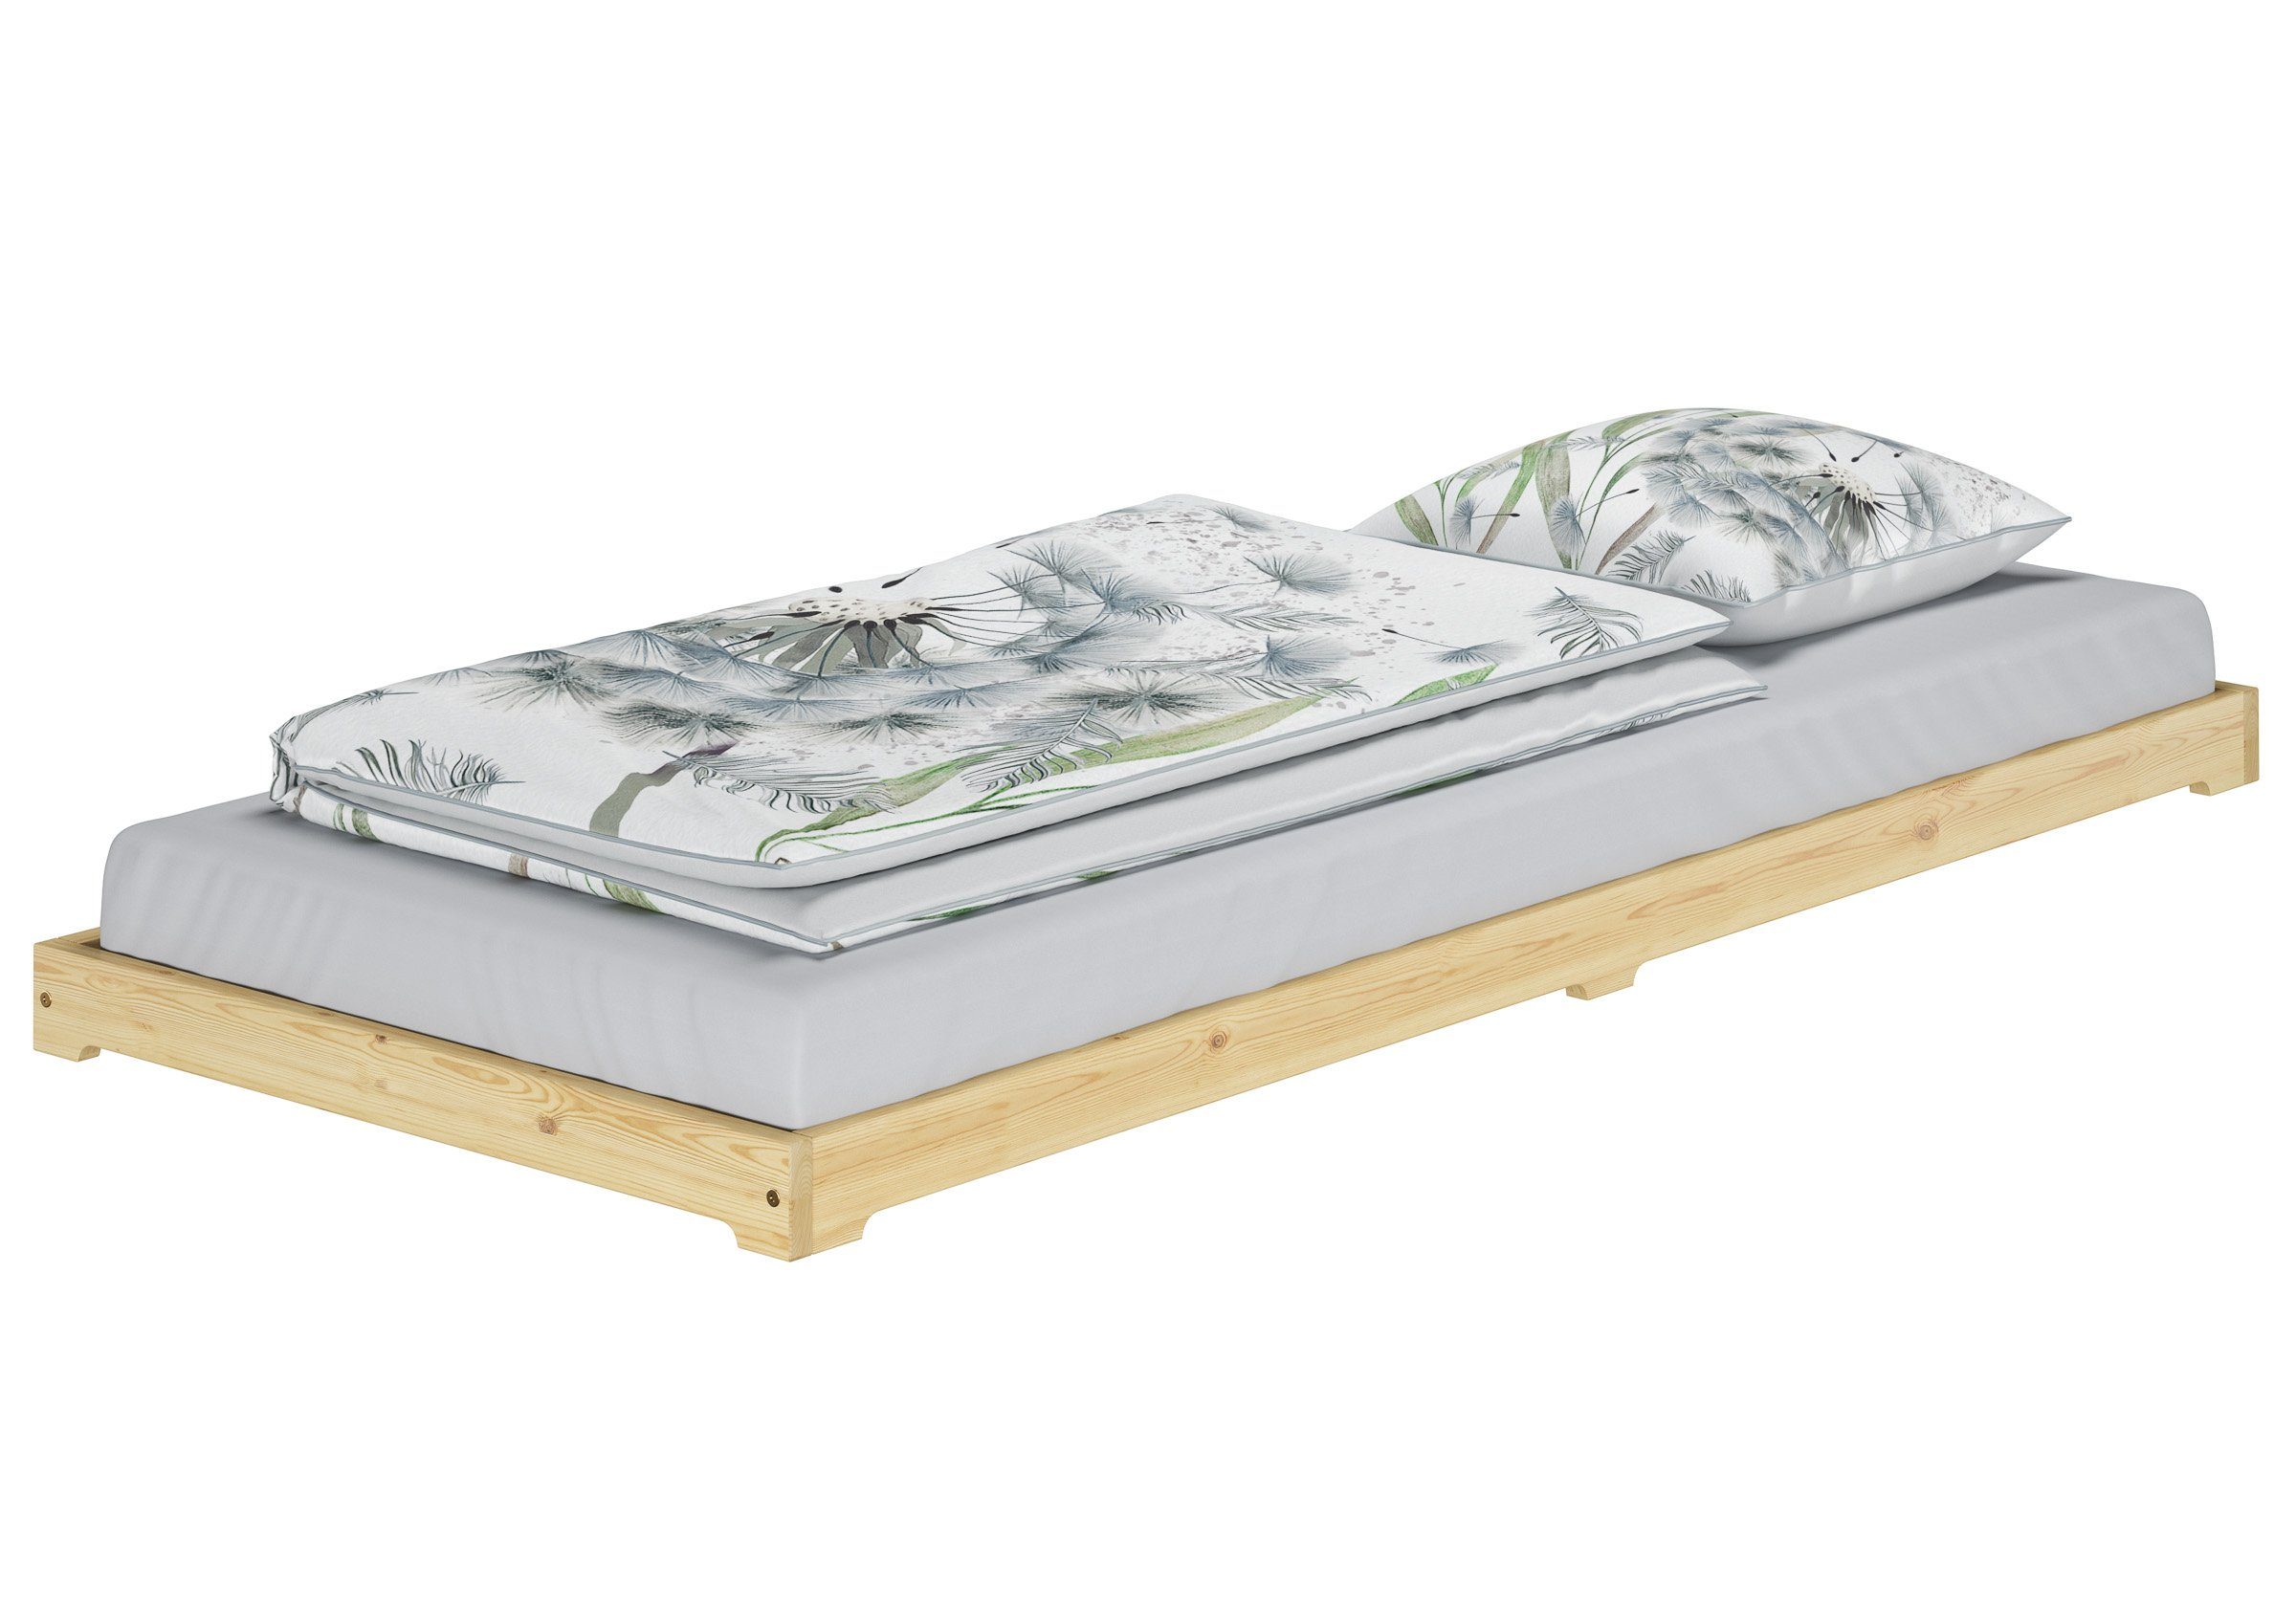 ERST-HOLZ Bett Studentenbett Futon extra niedriges Holzbett 80x200 cm Kiefer lackiert, Kieferfarblos lackiert